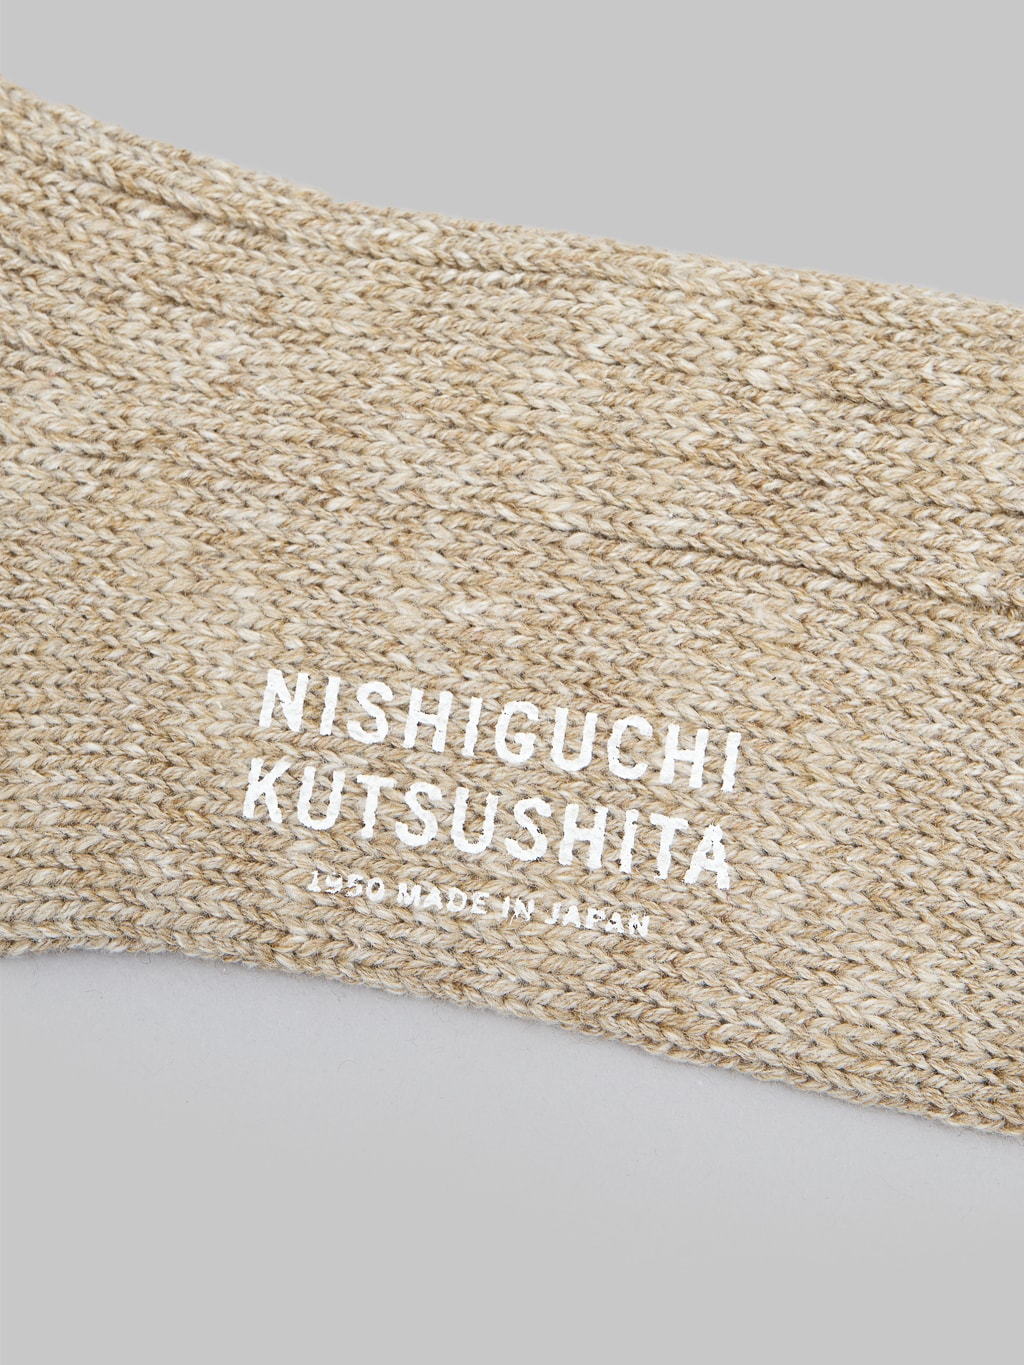 Nishiguchi Kutsushita Wool Cotton Slab Socks Red Brand Logo